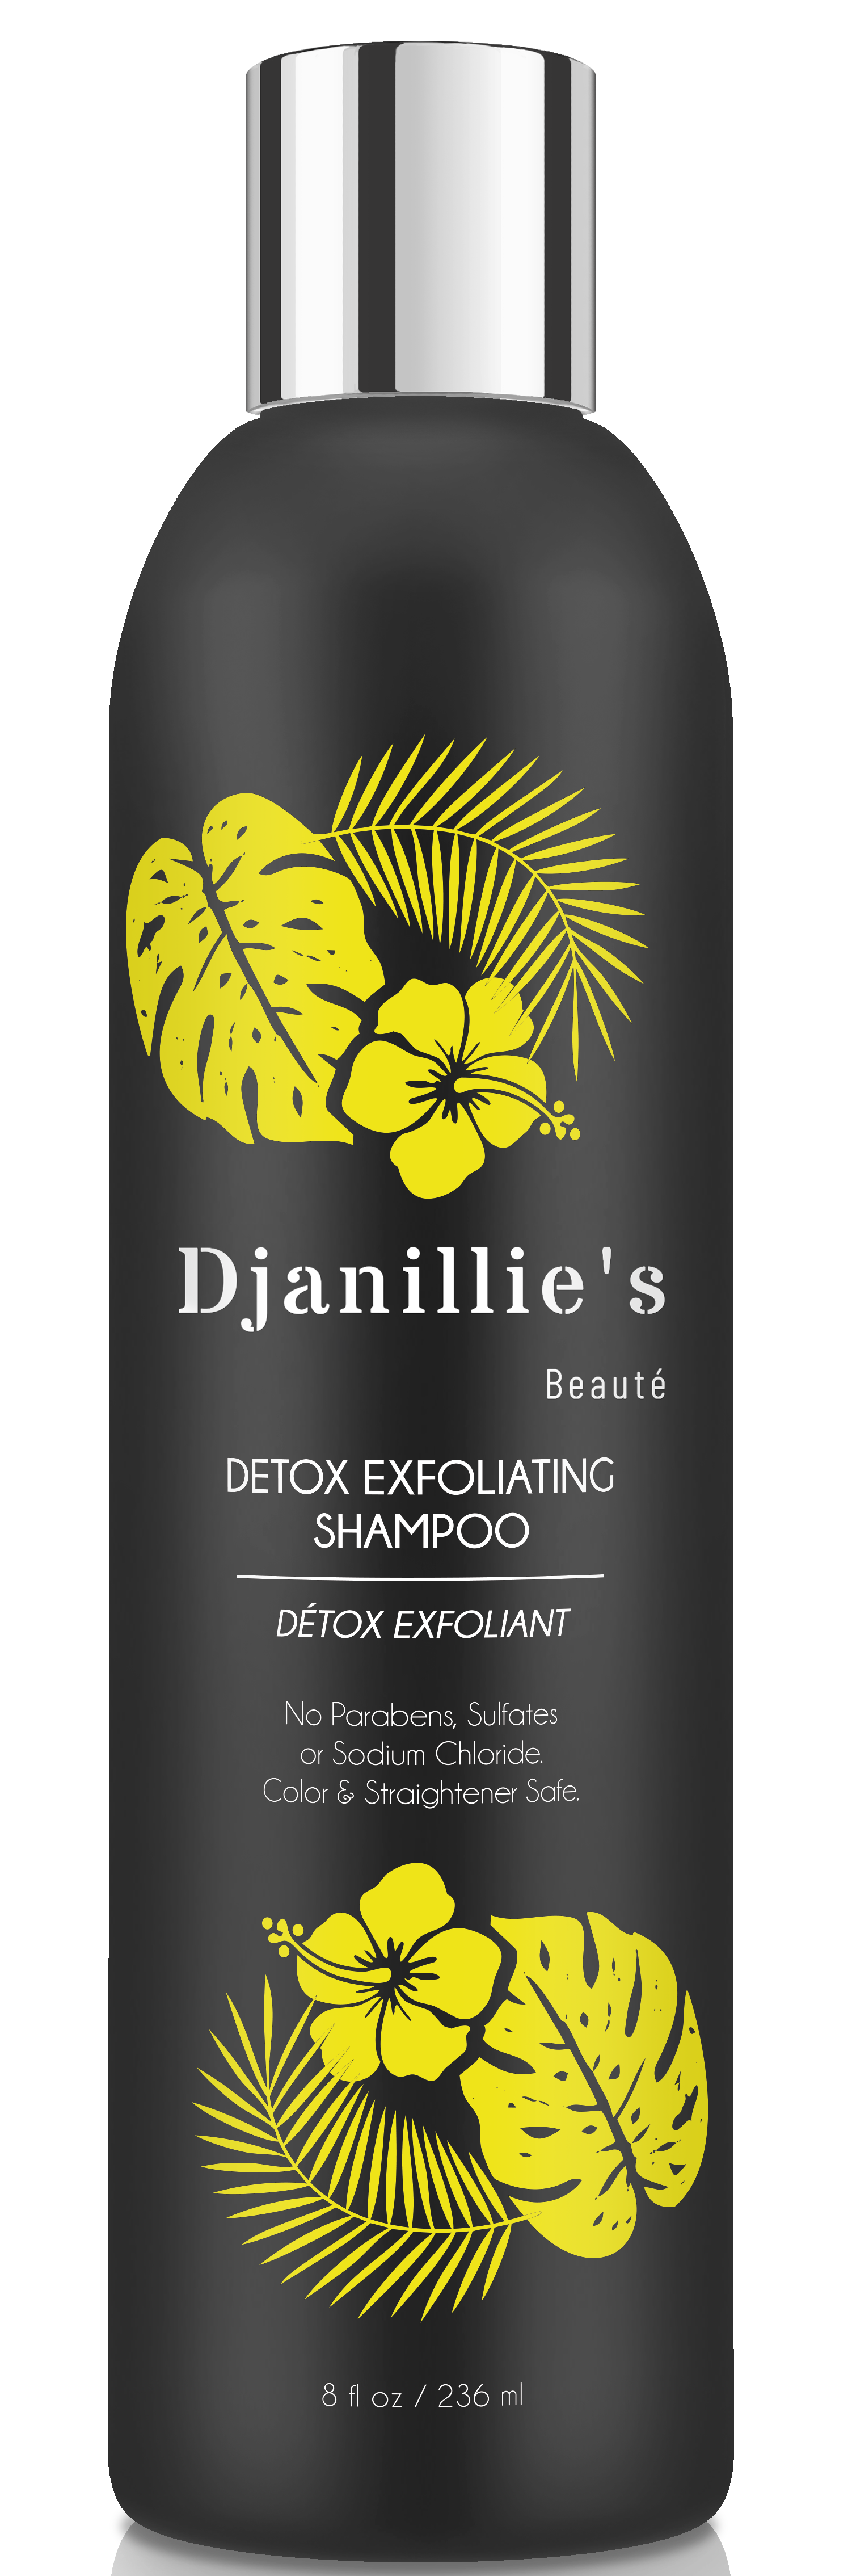 Detox Exfoliating Shampoo - Djanillie's Beauté